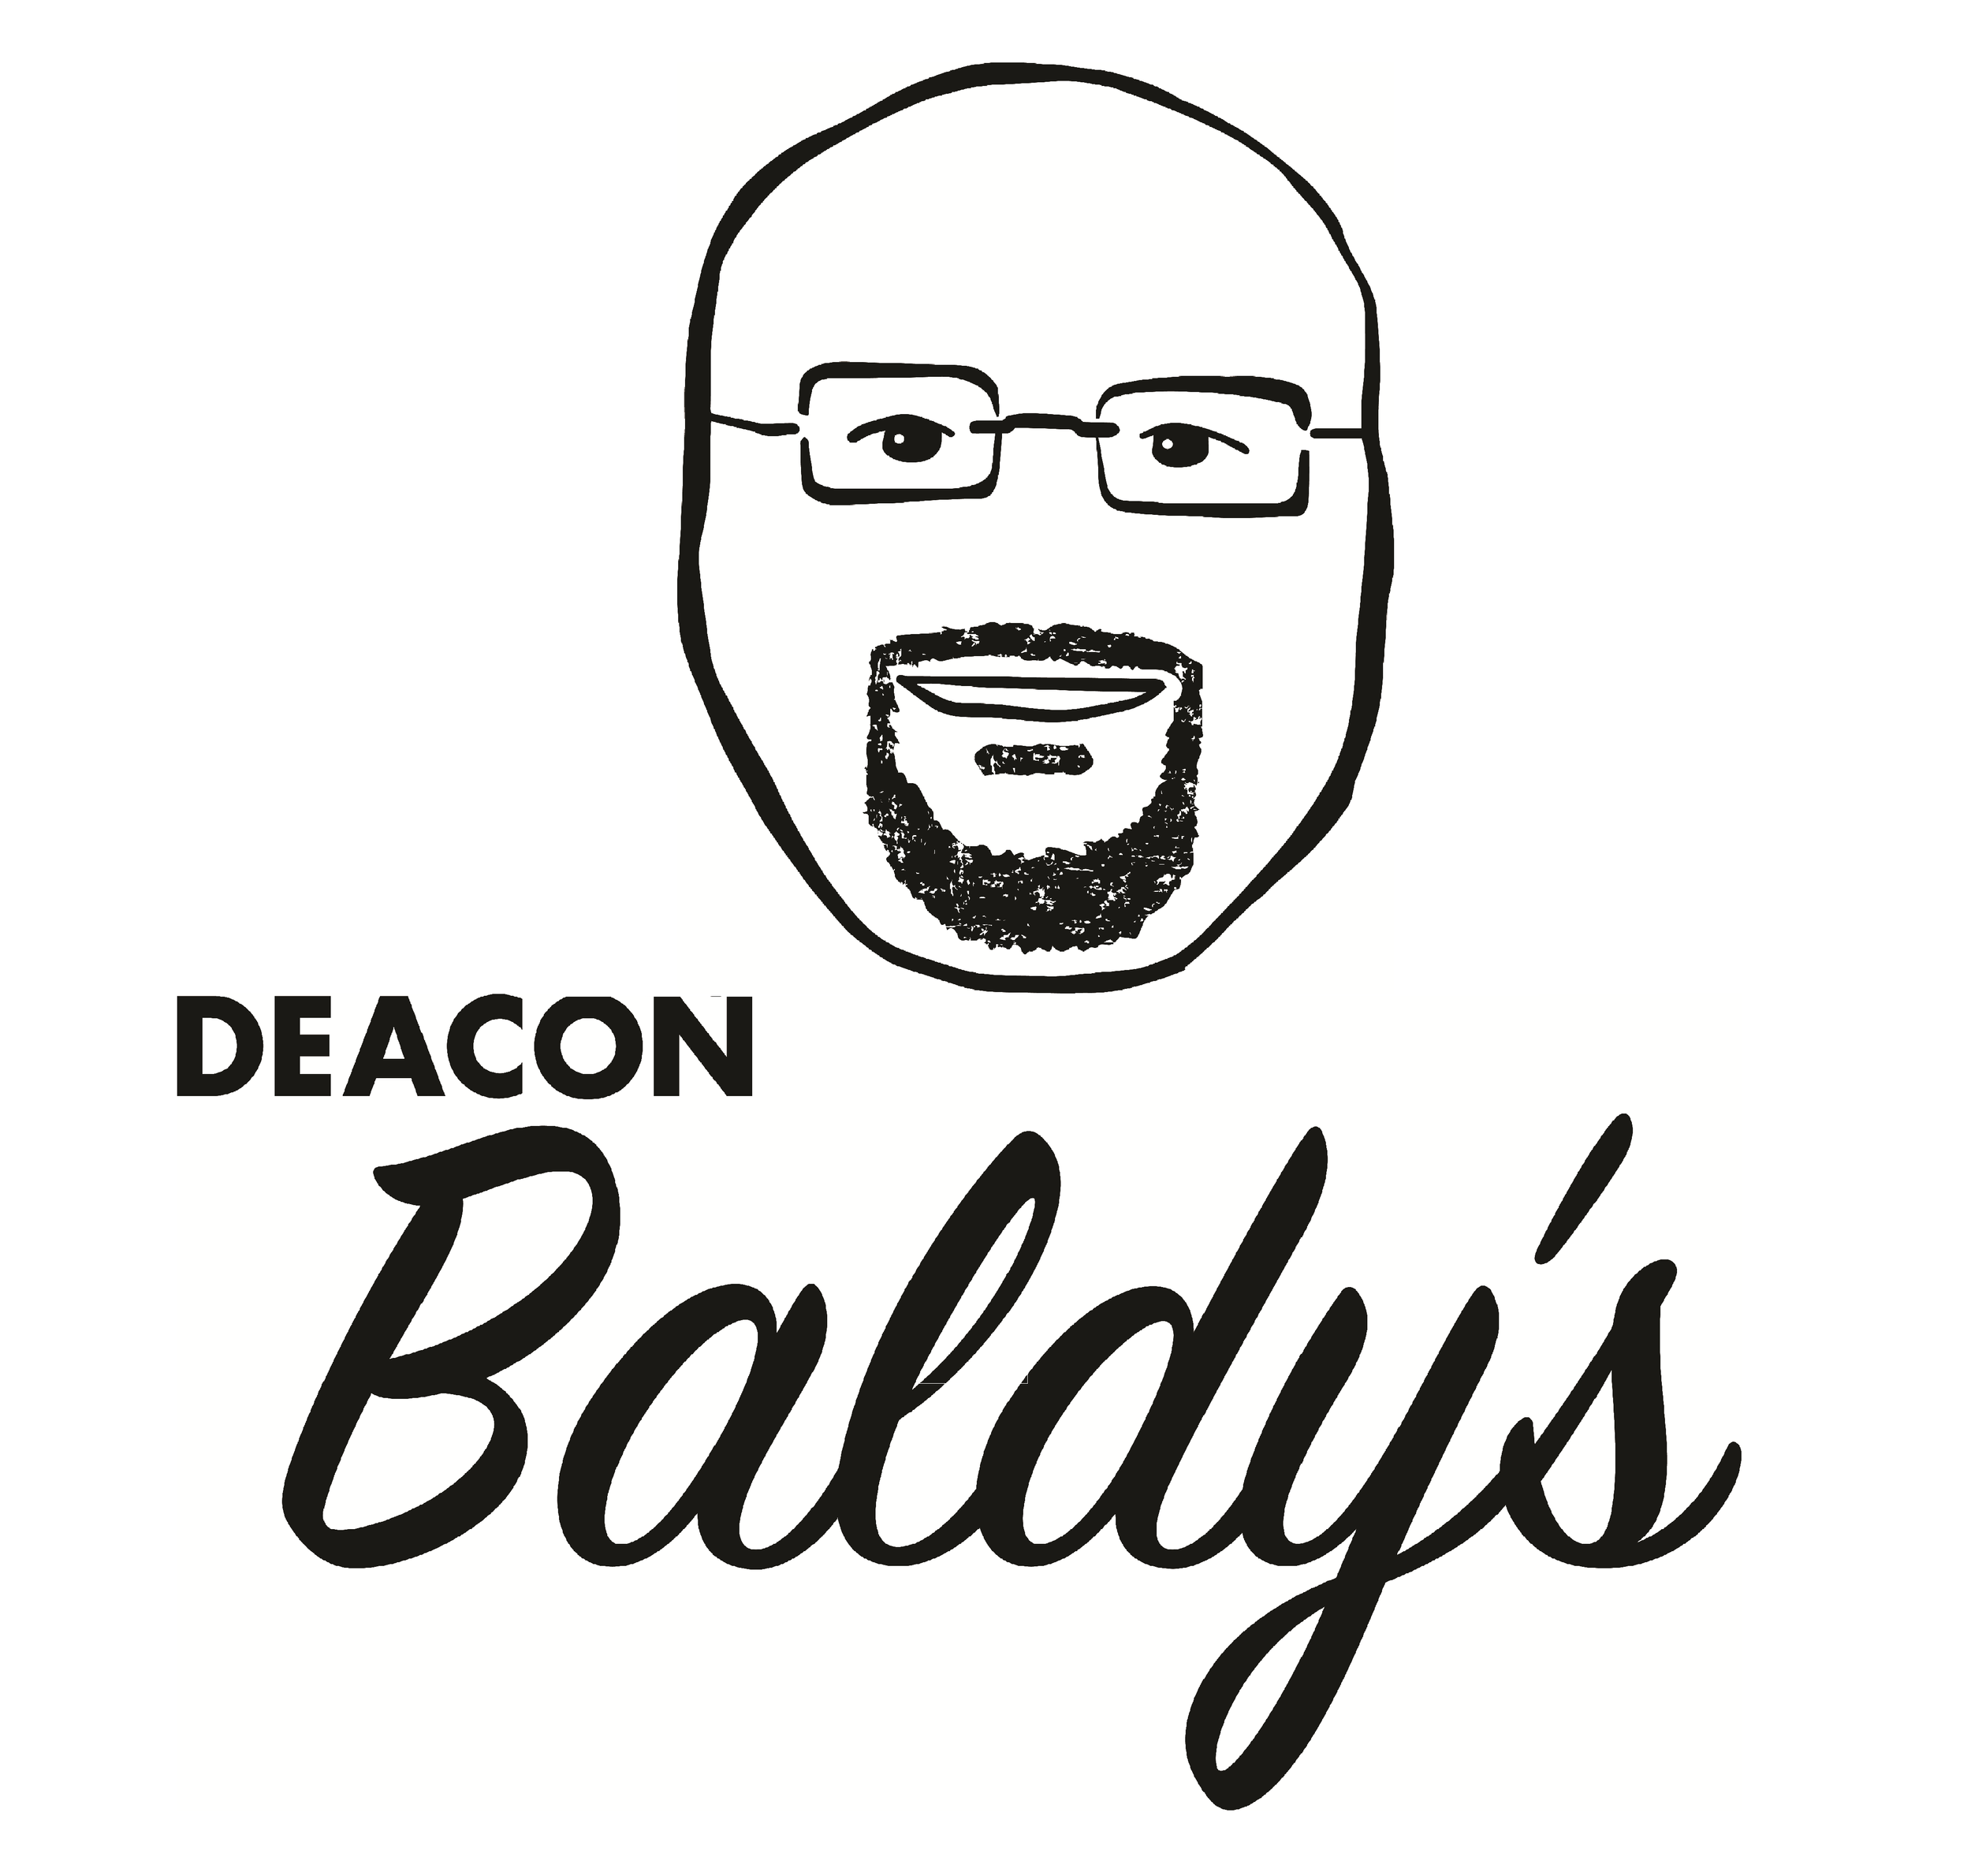 Mario Kart 8 Tournament - December 28th — Deacon Baldy's Bar & Food Trucks